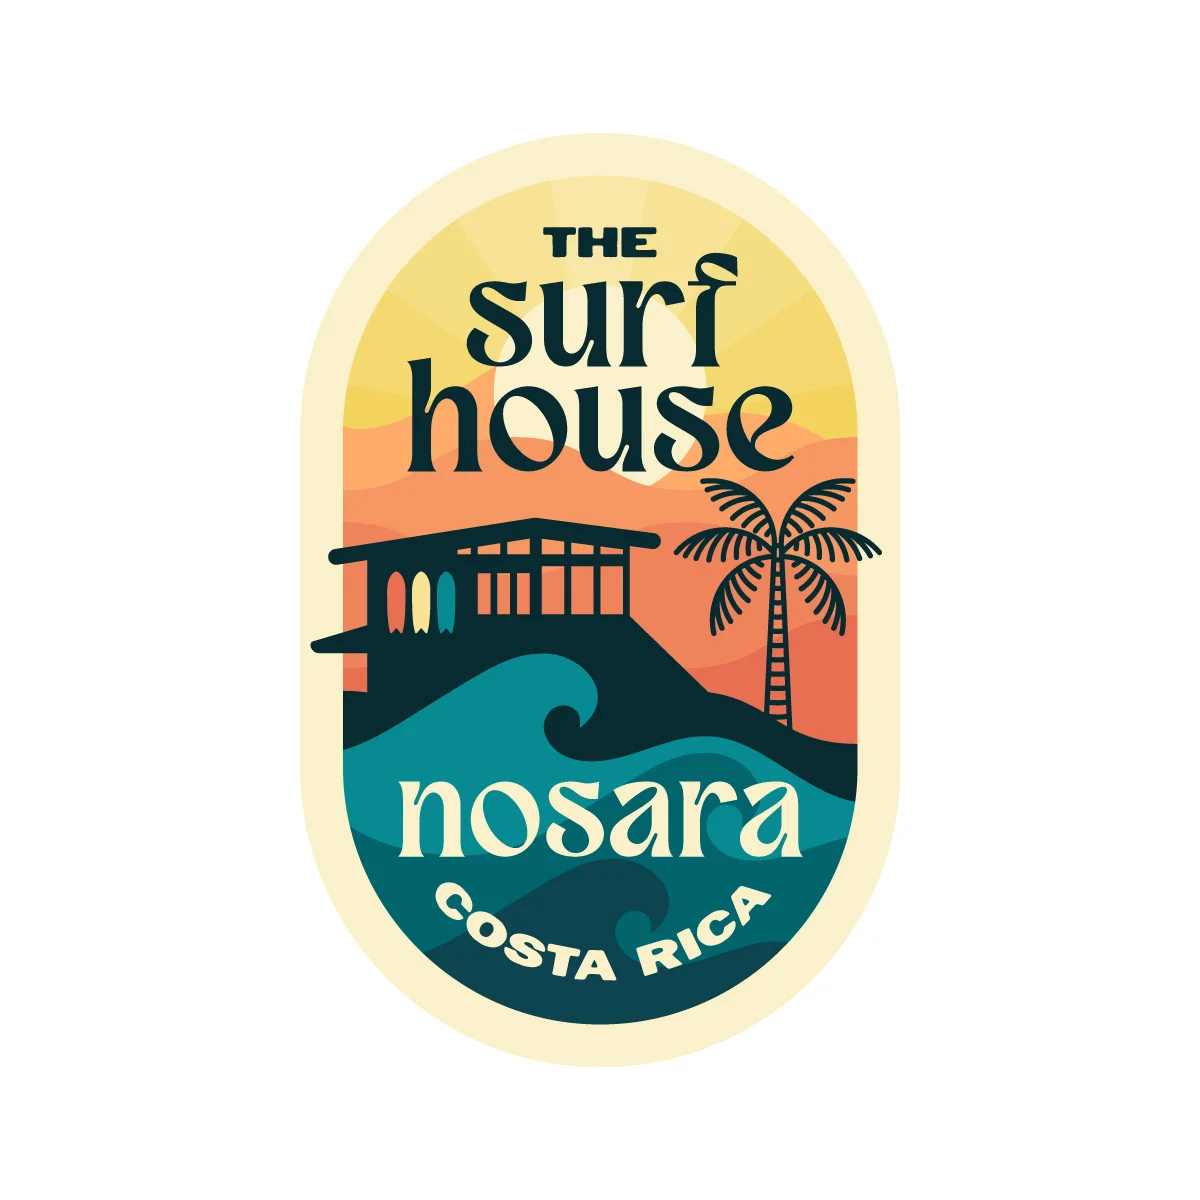 lindsay-mcghee-desigs-the-surf-house-nosara-logo-oval-1200x1200